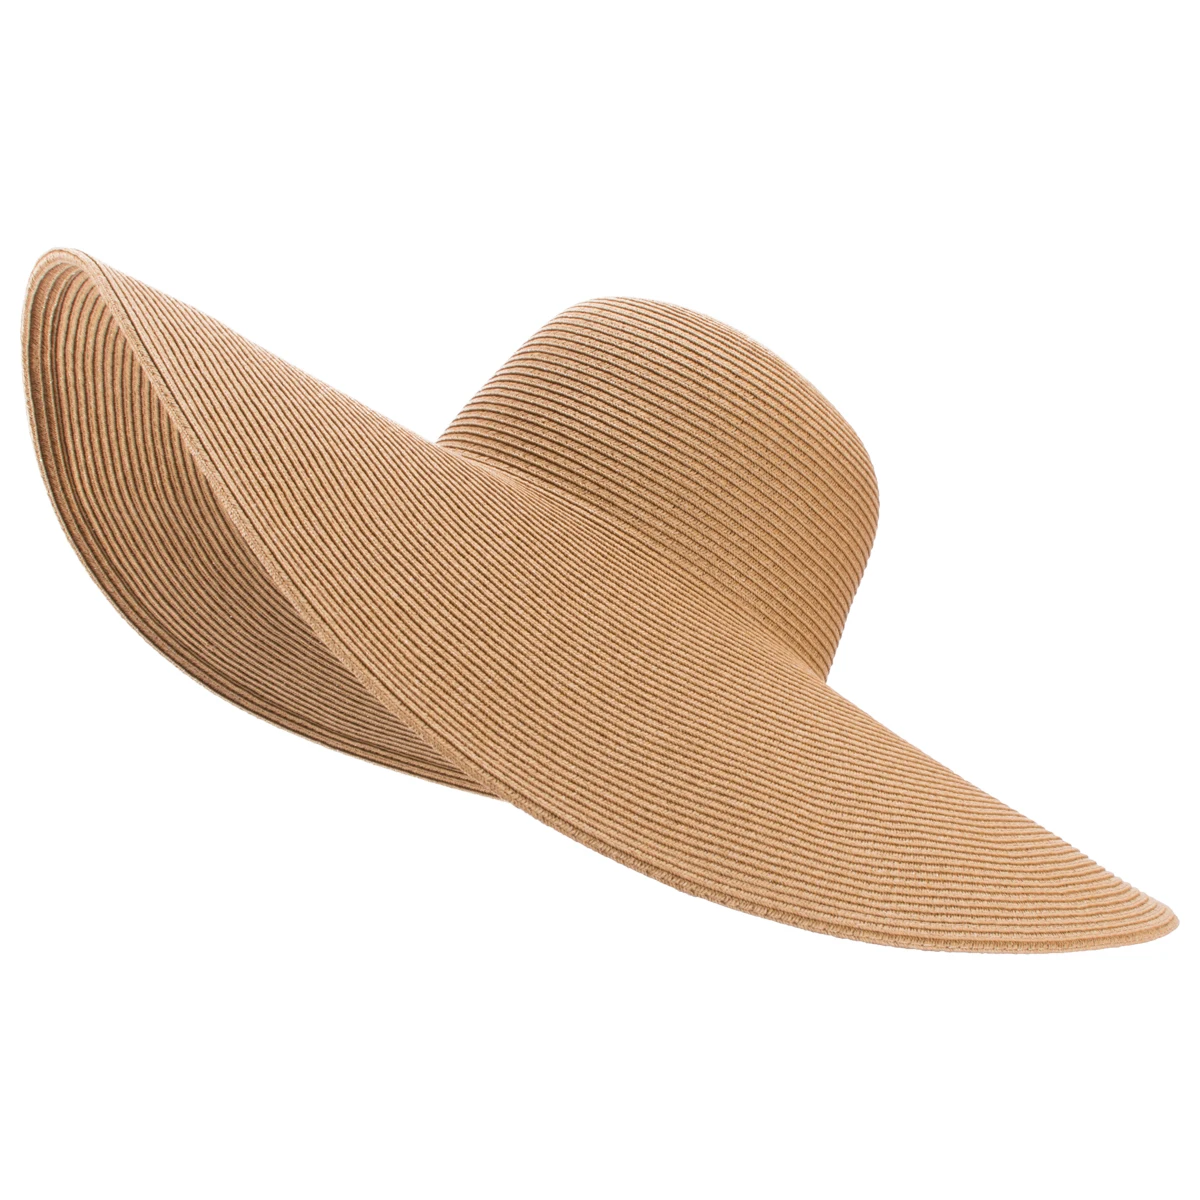 7.1''/18cm Foldable Oversized Huge Wide Brim Sun Beach Hats Straw Summer Wedding Womens Ladies Floppy Party Dressy